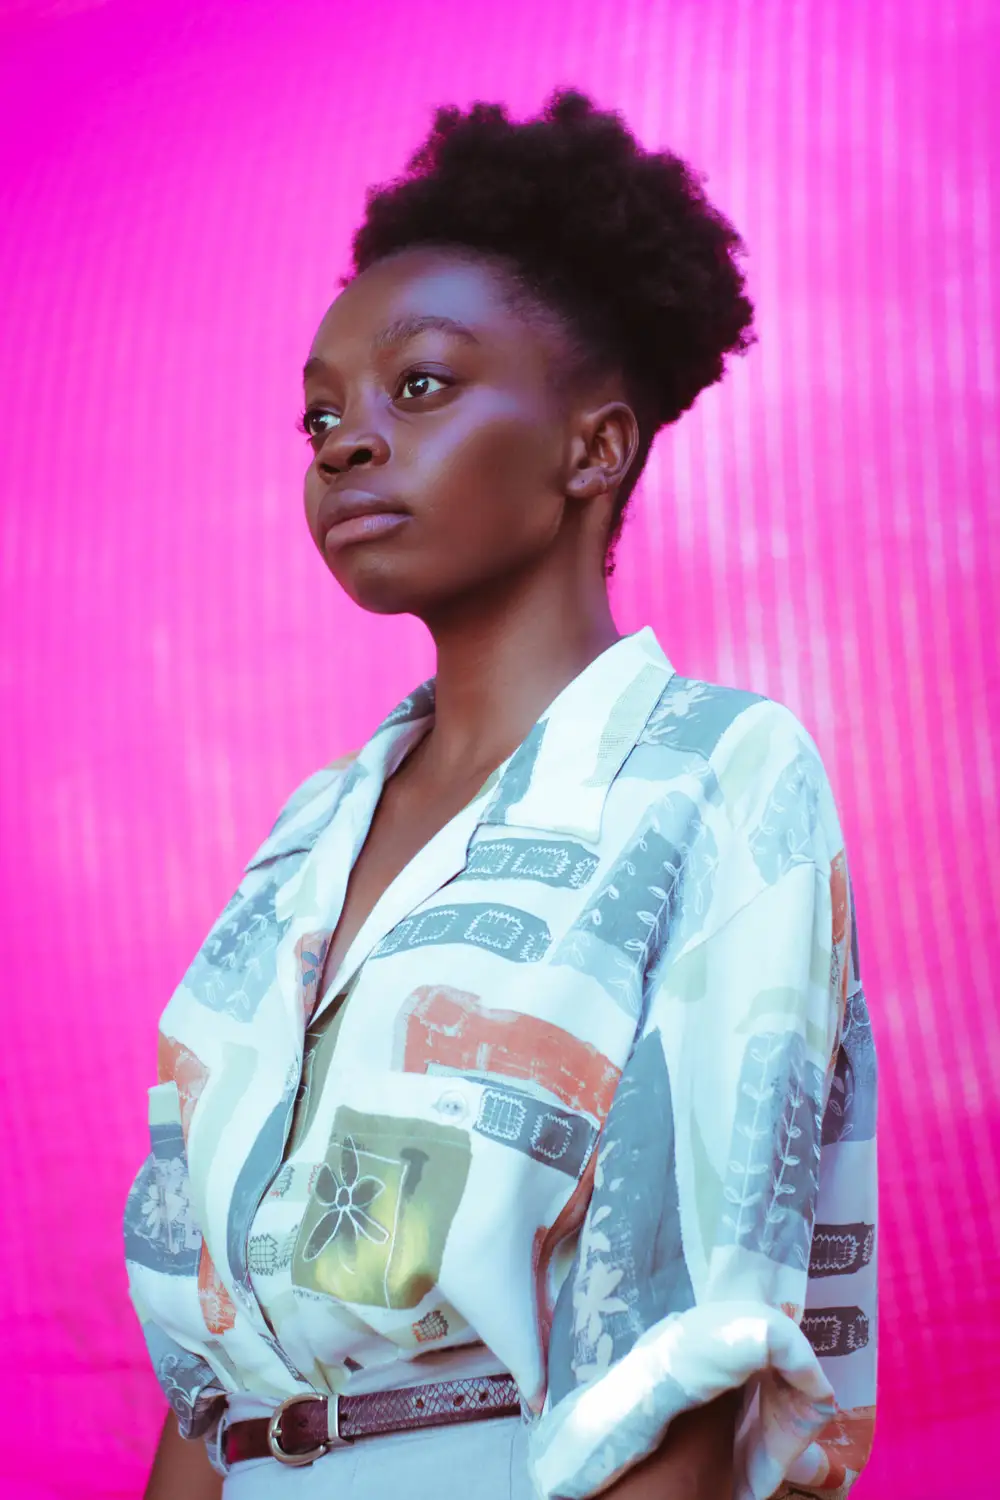 Black girl on afro behind pink background